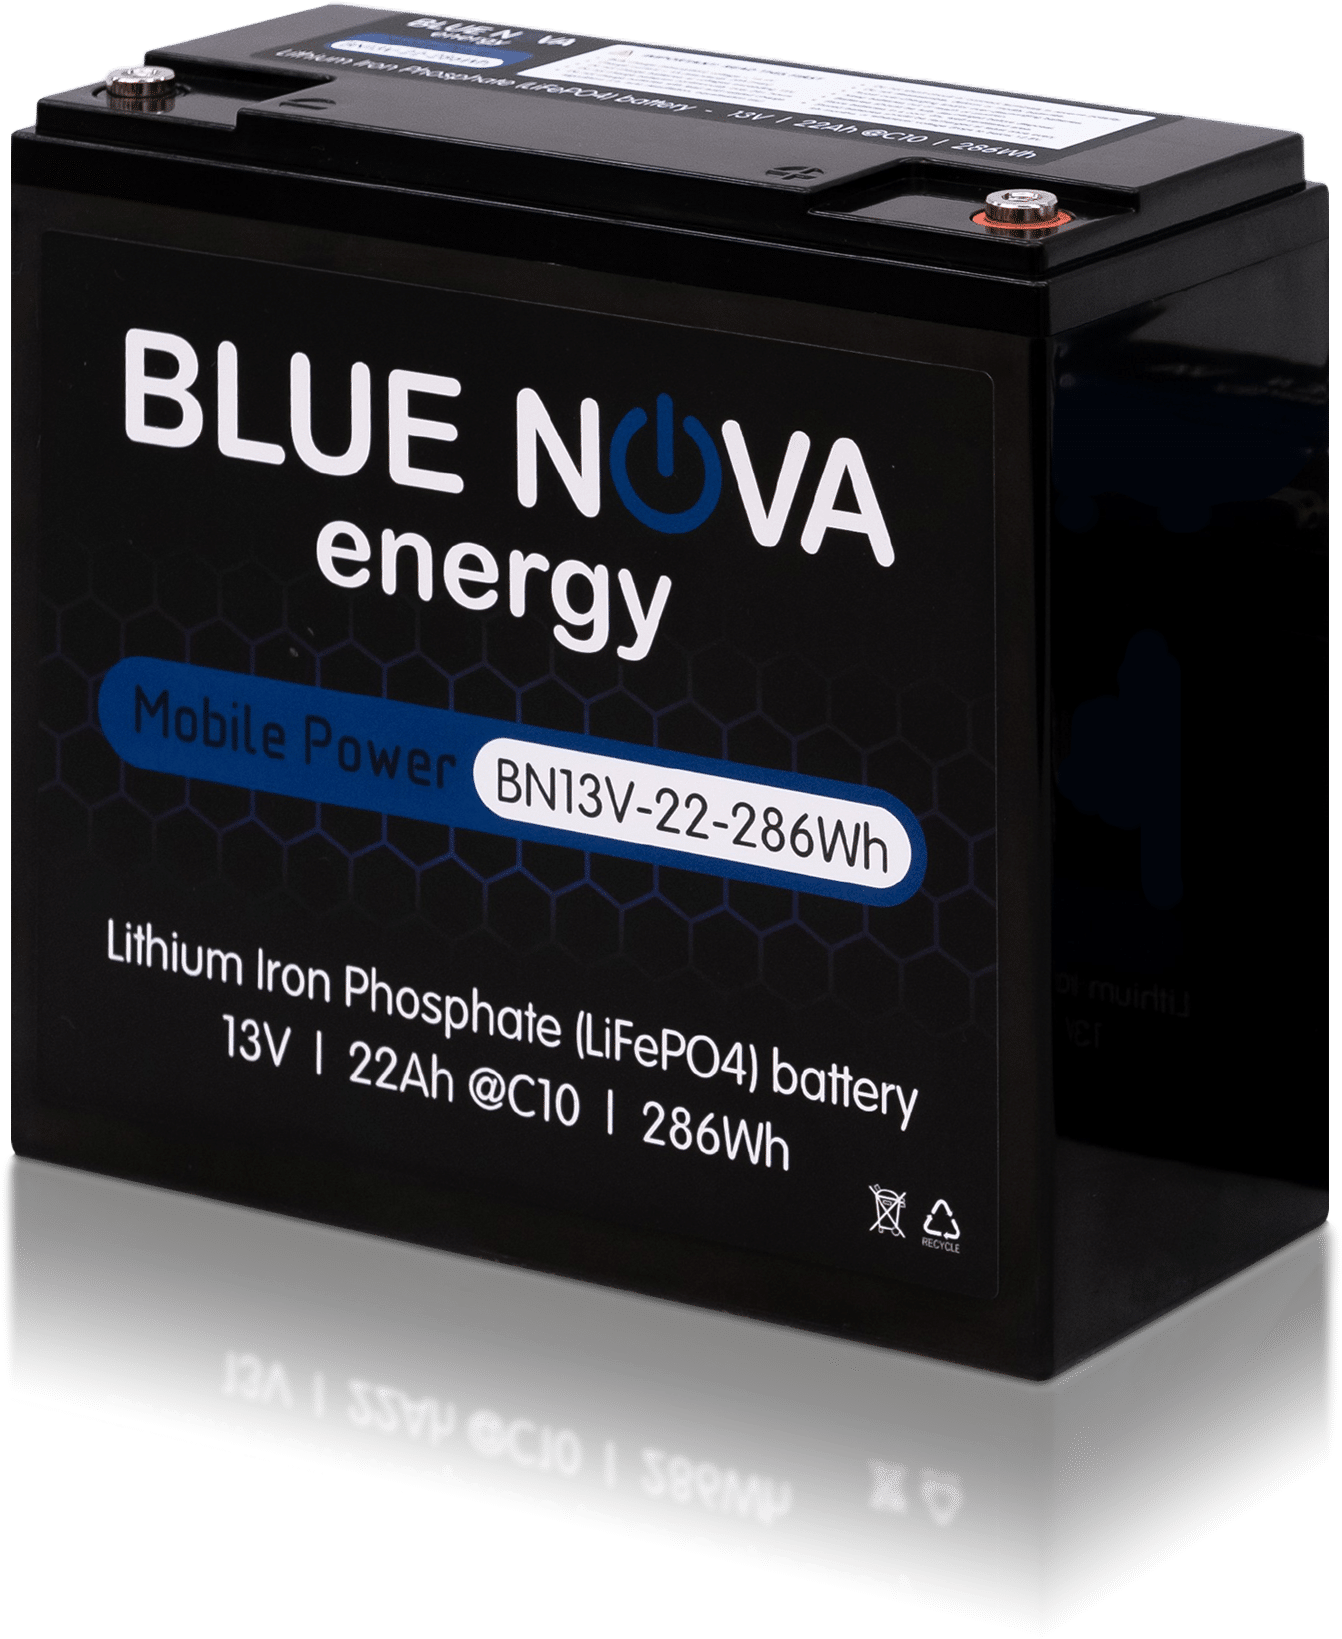 Bluenova 22Ah 13V LiFePO4 Mobile Power Series 280Wh Lithium Iron Phosphate Battery